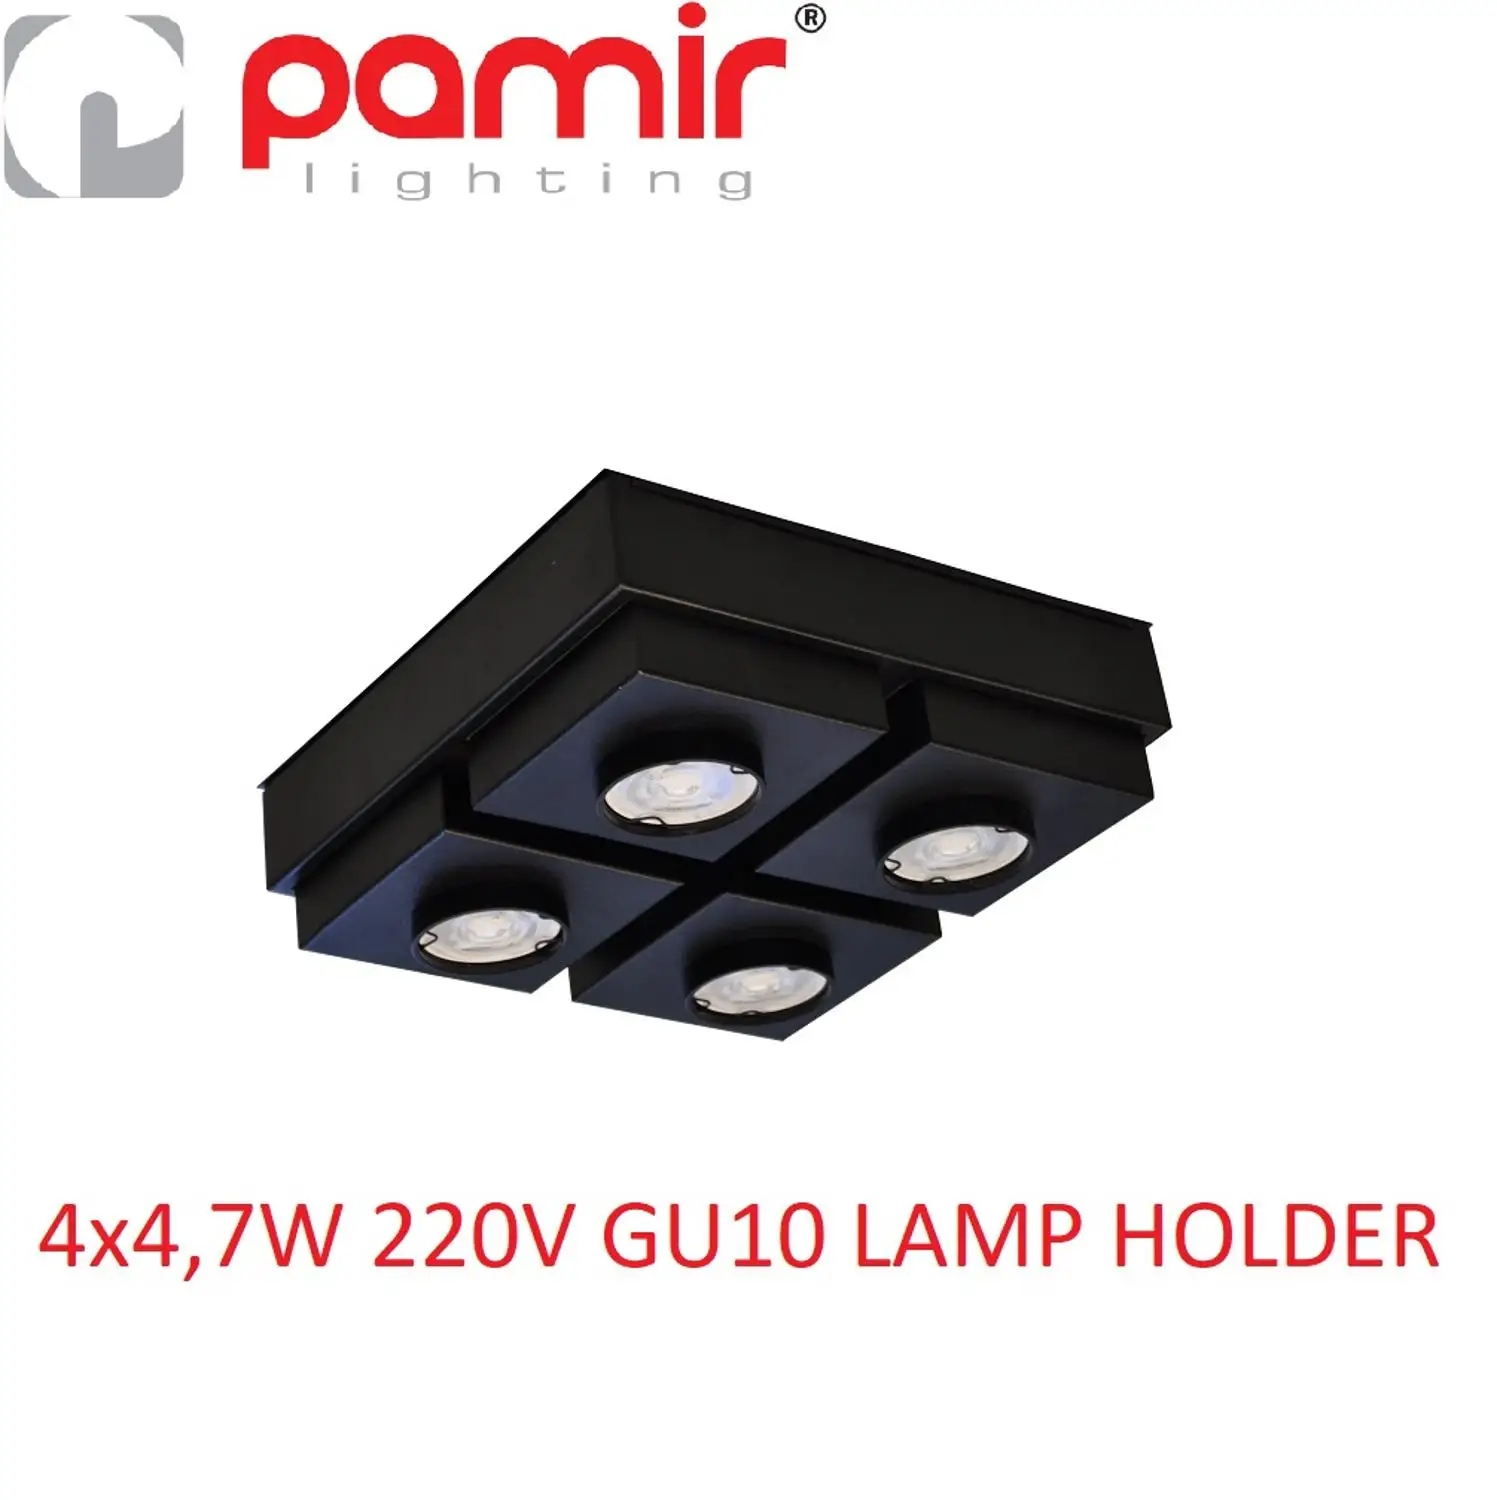 Pamir Lighting 4x4,7W Dimensions: 4x85x85mm,4x100x100mm Ouadro Series GU10 Lamp Holder,Energy Saving Light, Decorative Design